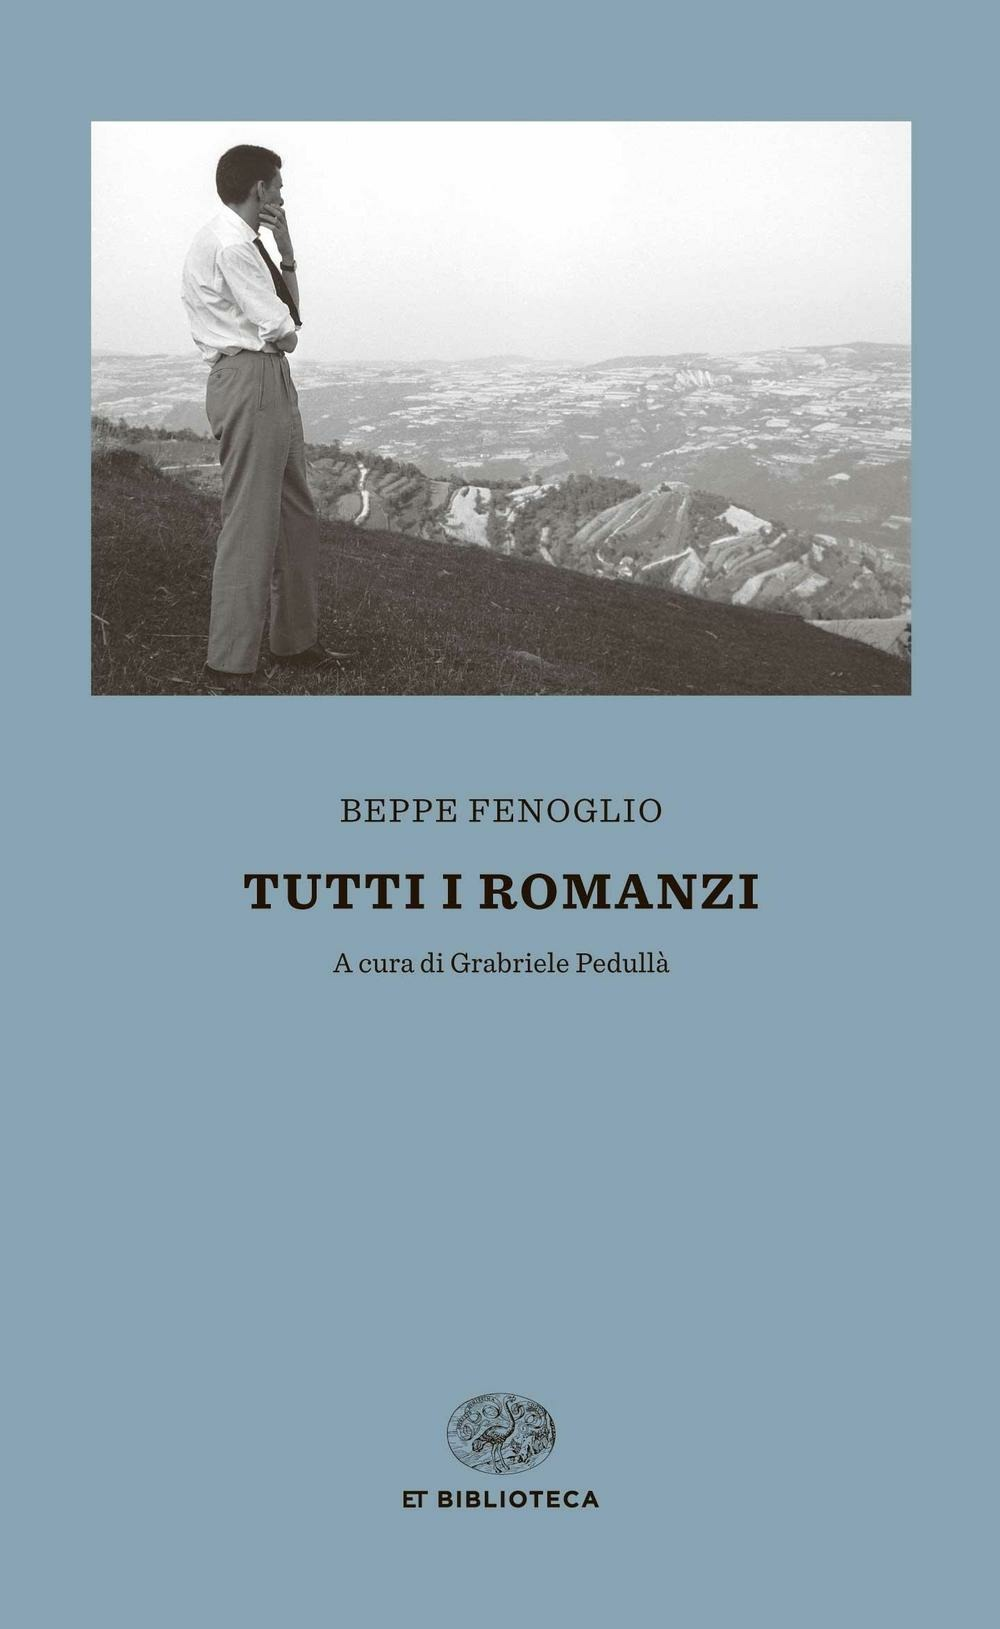 Tutti i romanzi - Beppe Fenoglio - Einaudi